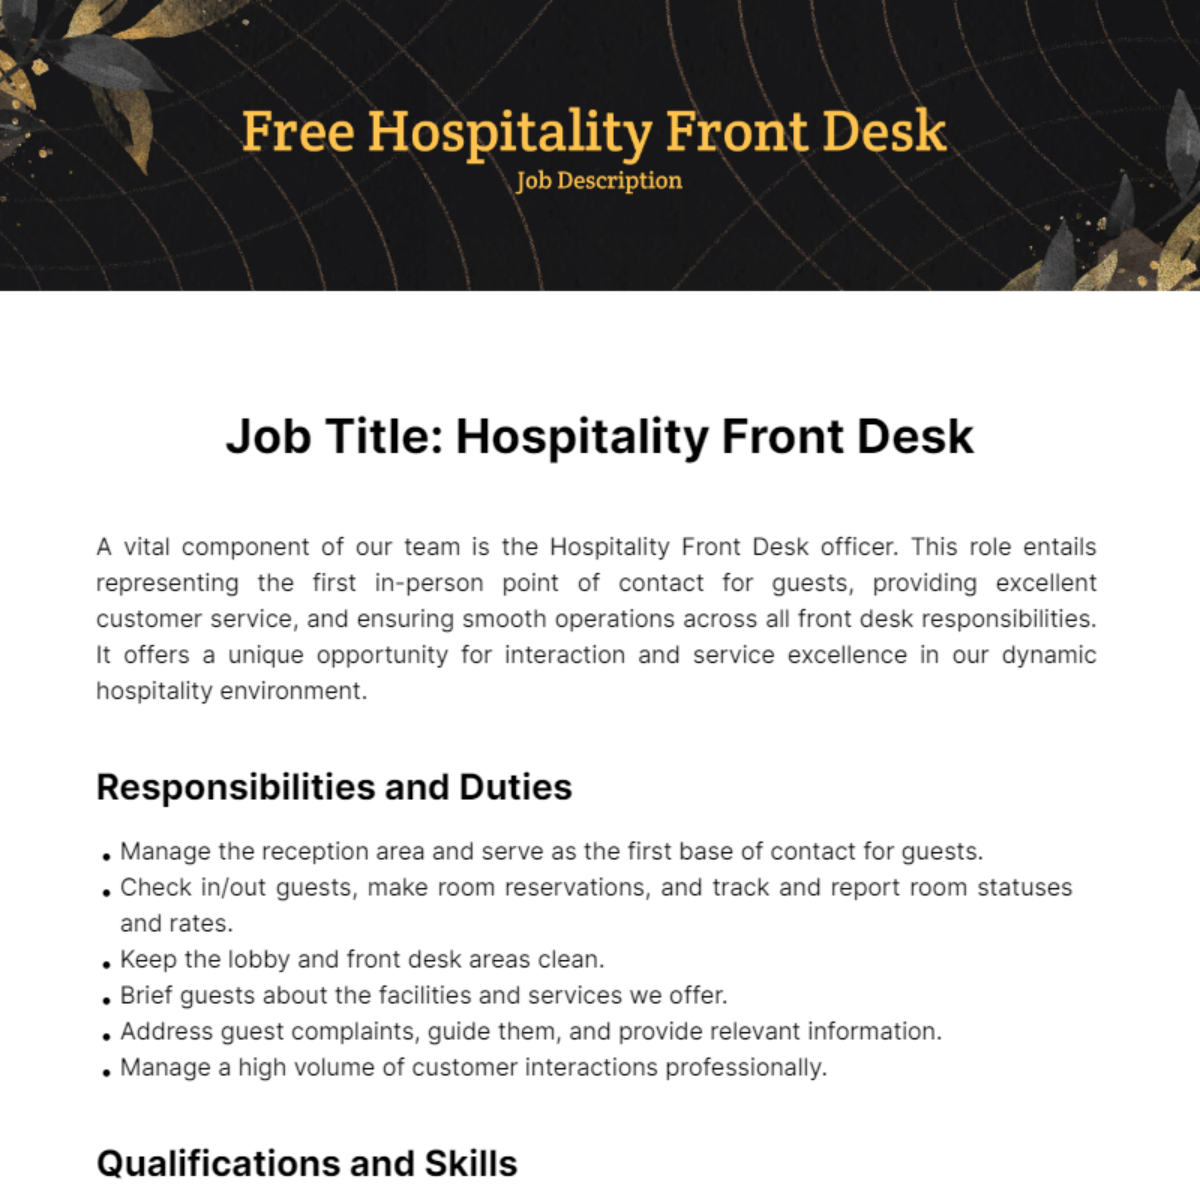 Free Hospitality Front Desk Job Description Template